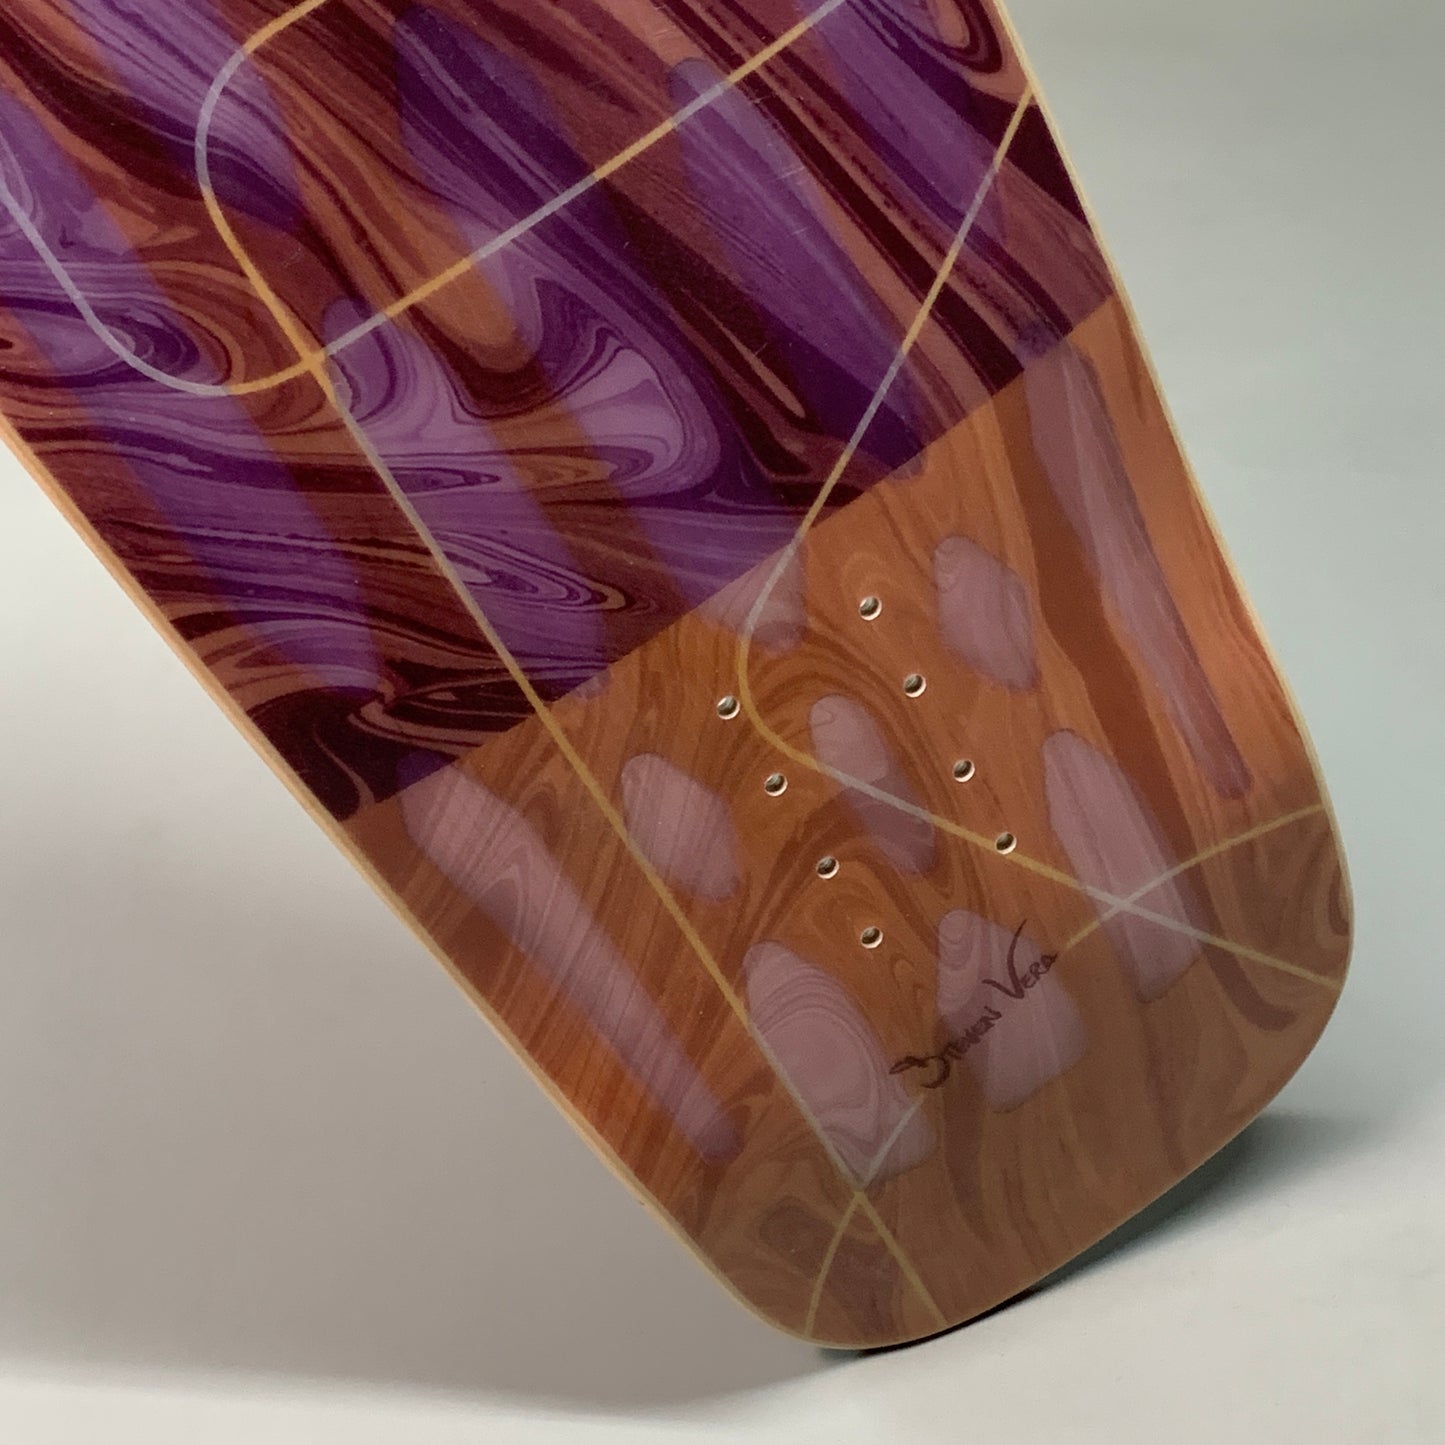 LANDYACHTZ Popsicle Smooth Top Longboard/Skateboard Double Kick Canadian Maple Purple/Green/Orange  36.5"x9.5" (New Other)